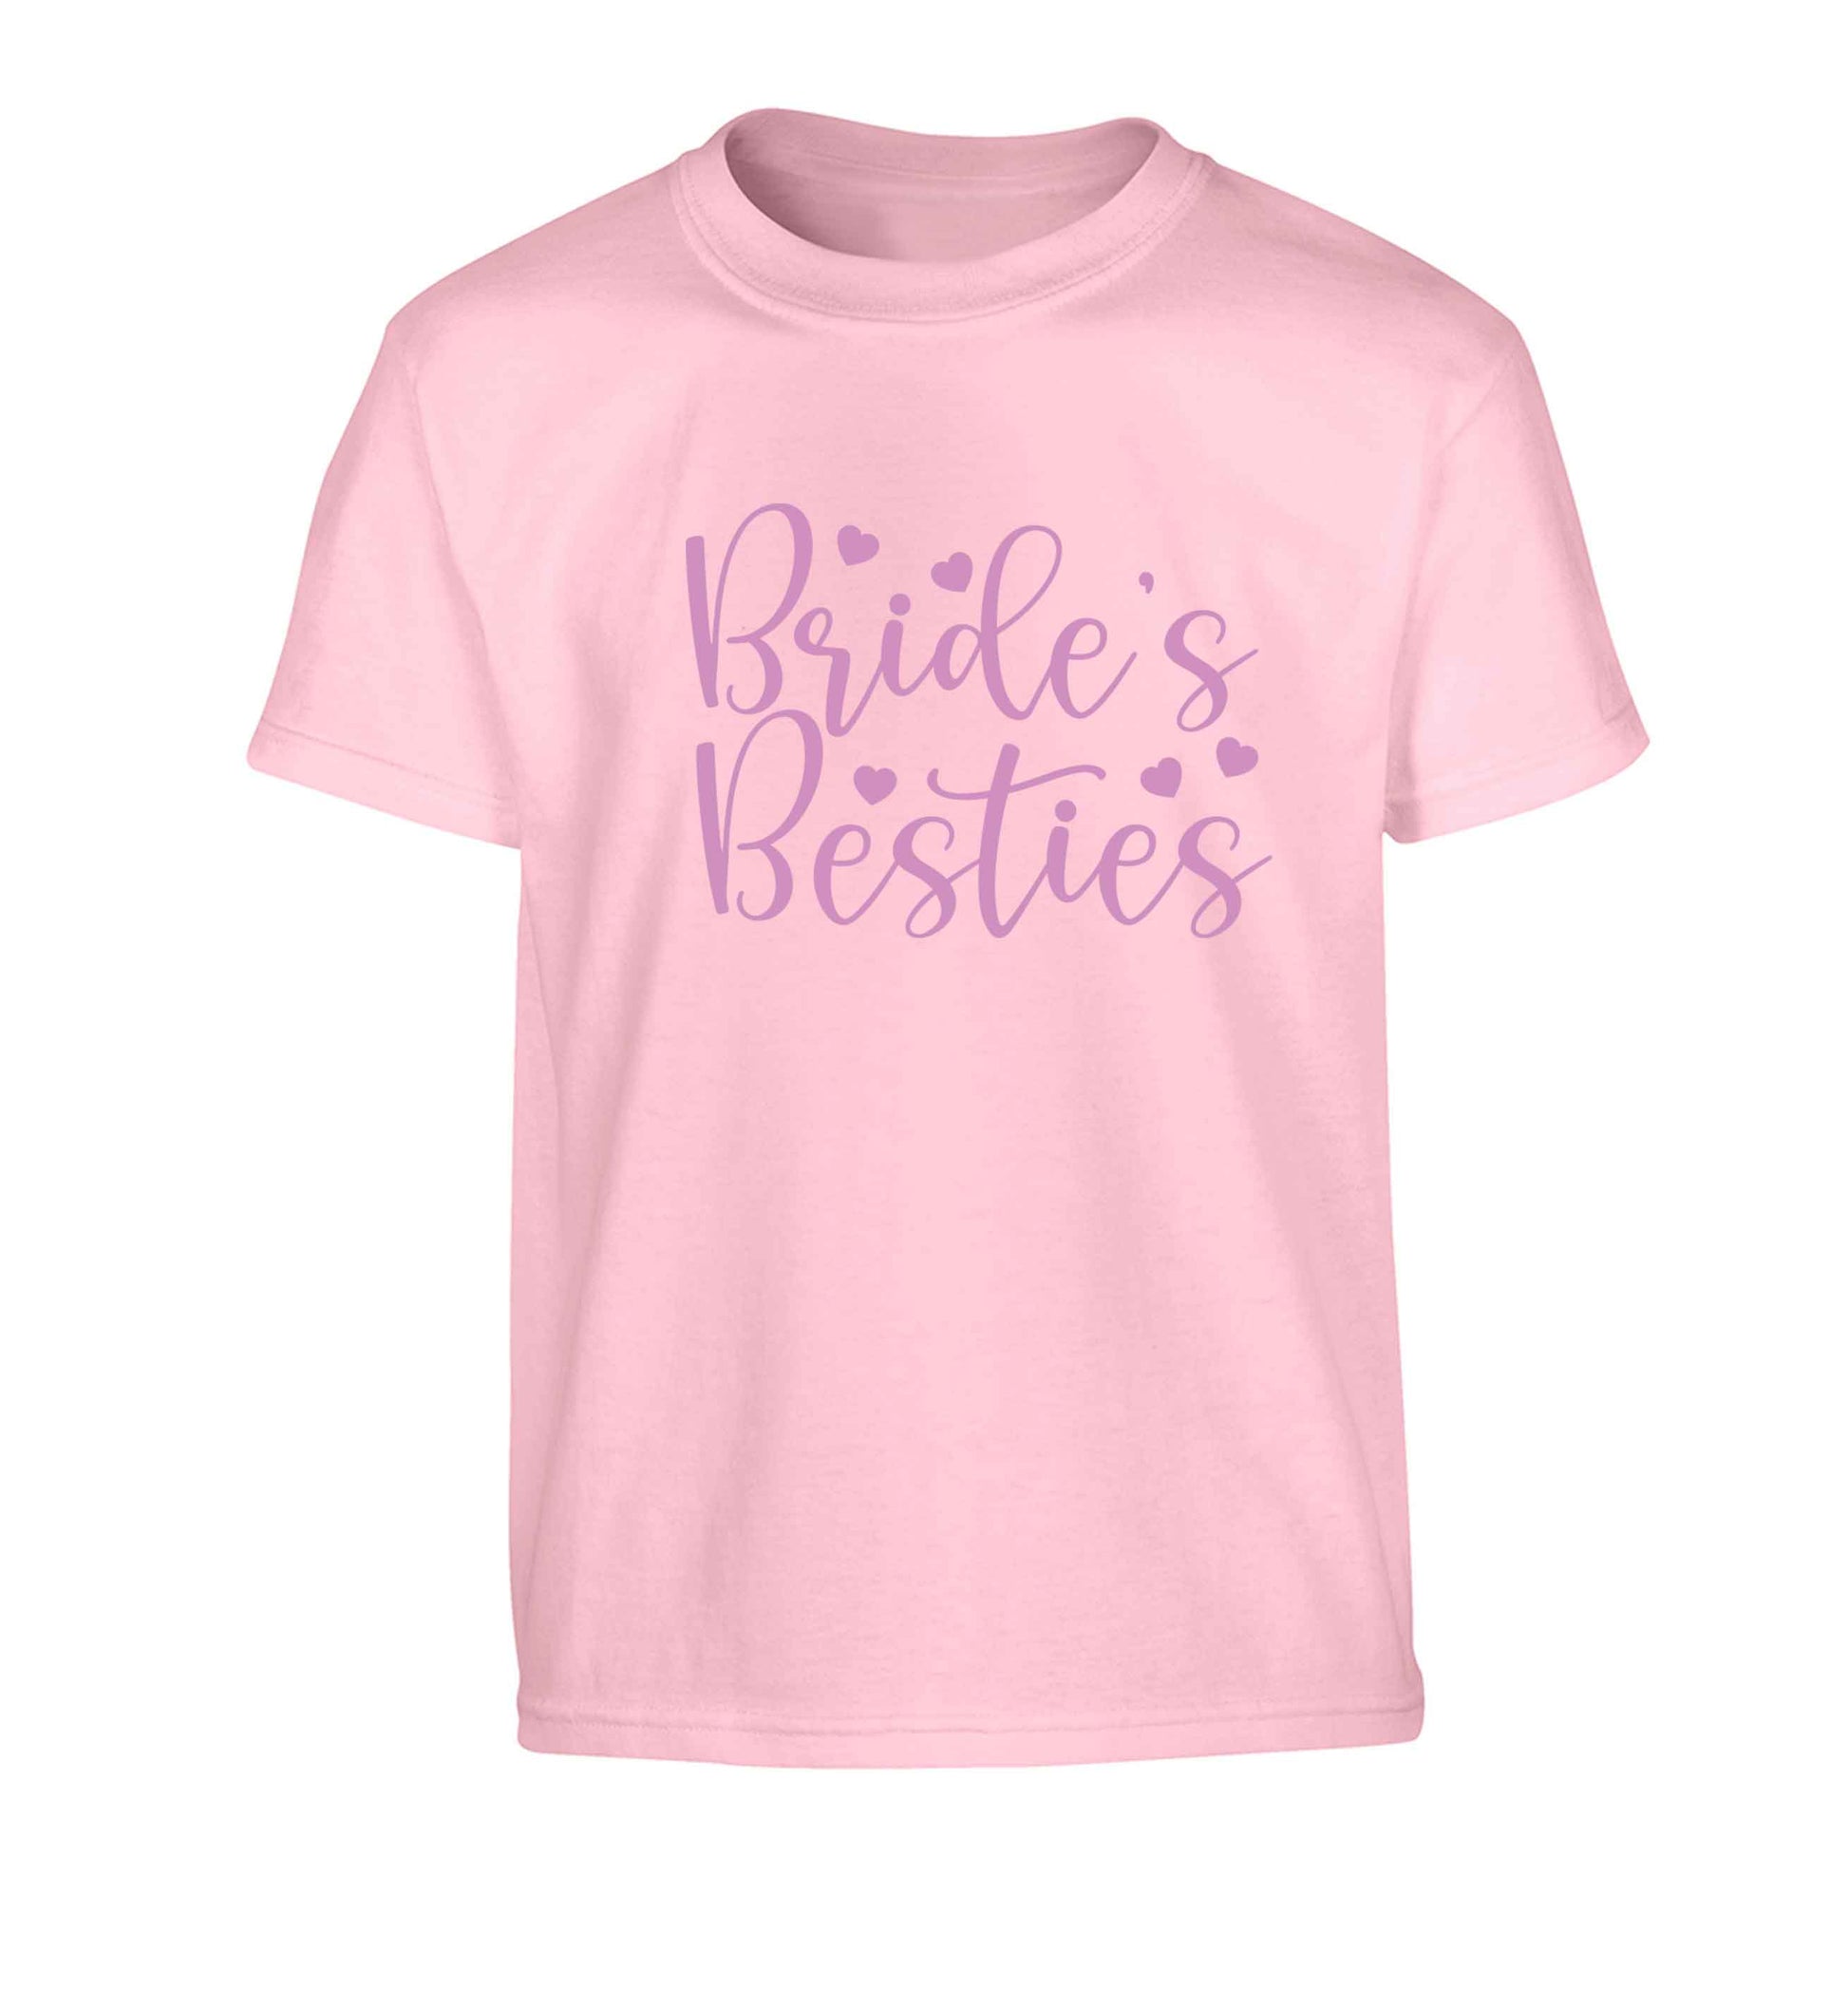 Brides besties Children's light pink Tshirt 12-13 Years